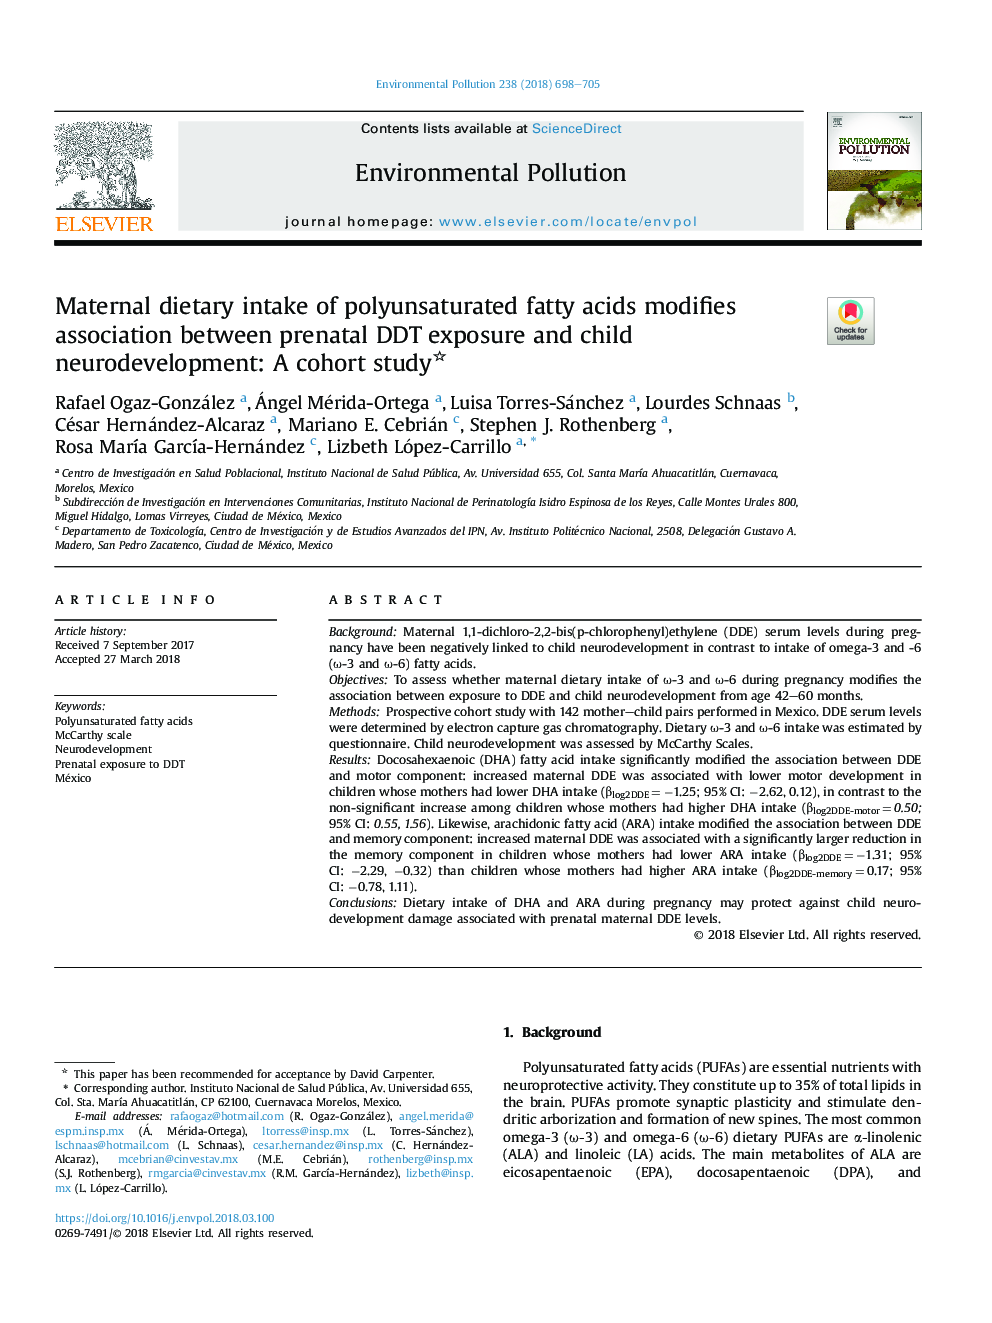 Maternal dietary intake of polyunsaturated fatty acids modifies association between prenatal DDT exposure and child neurodevelopment: A cohort study